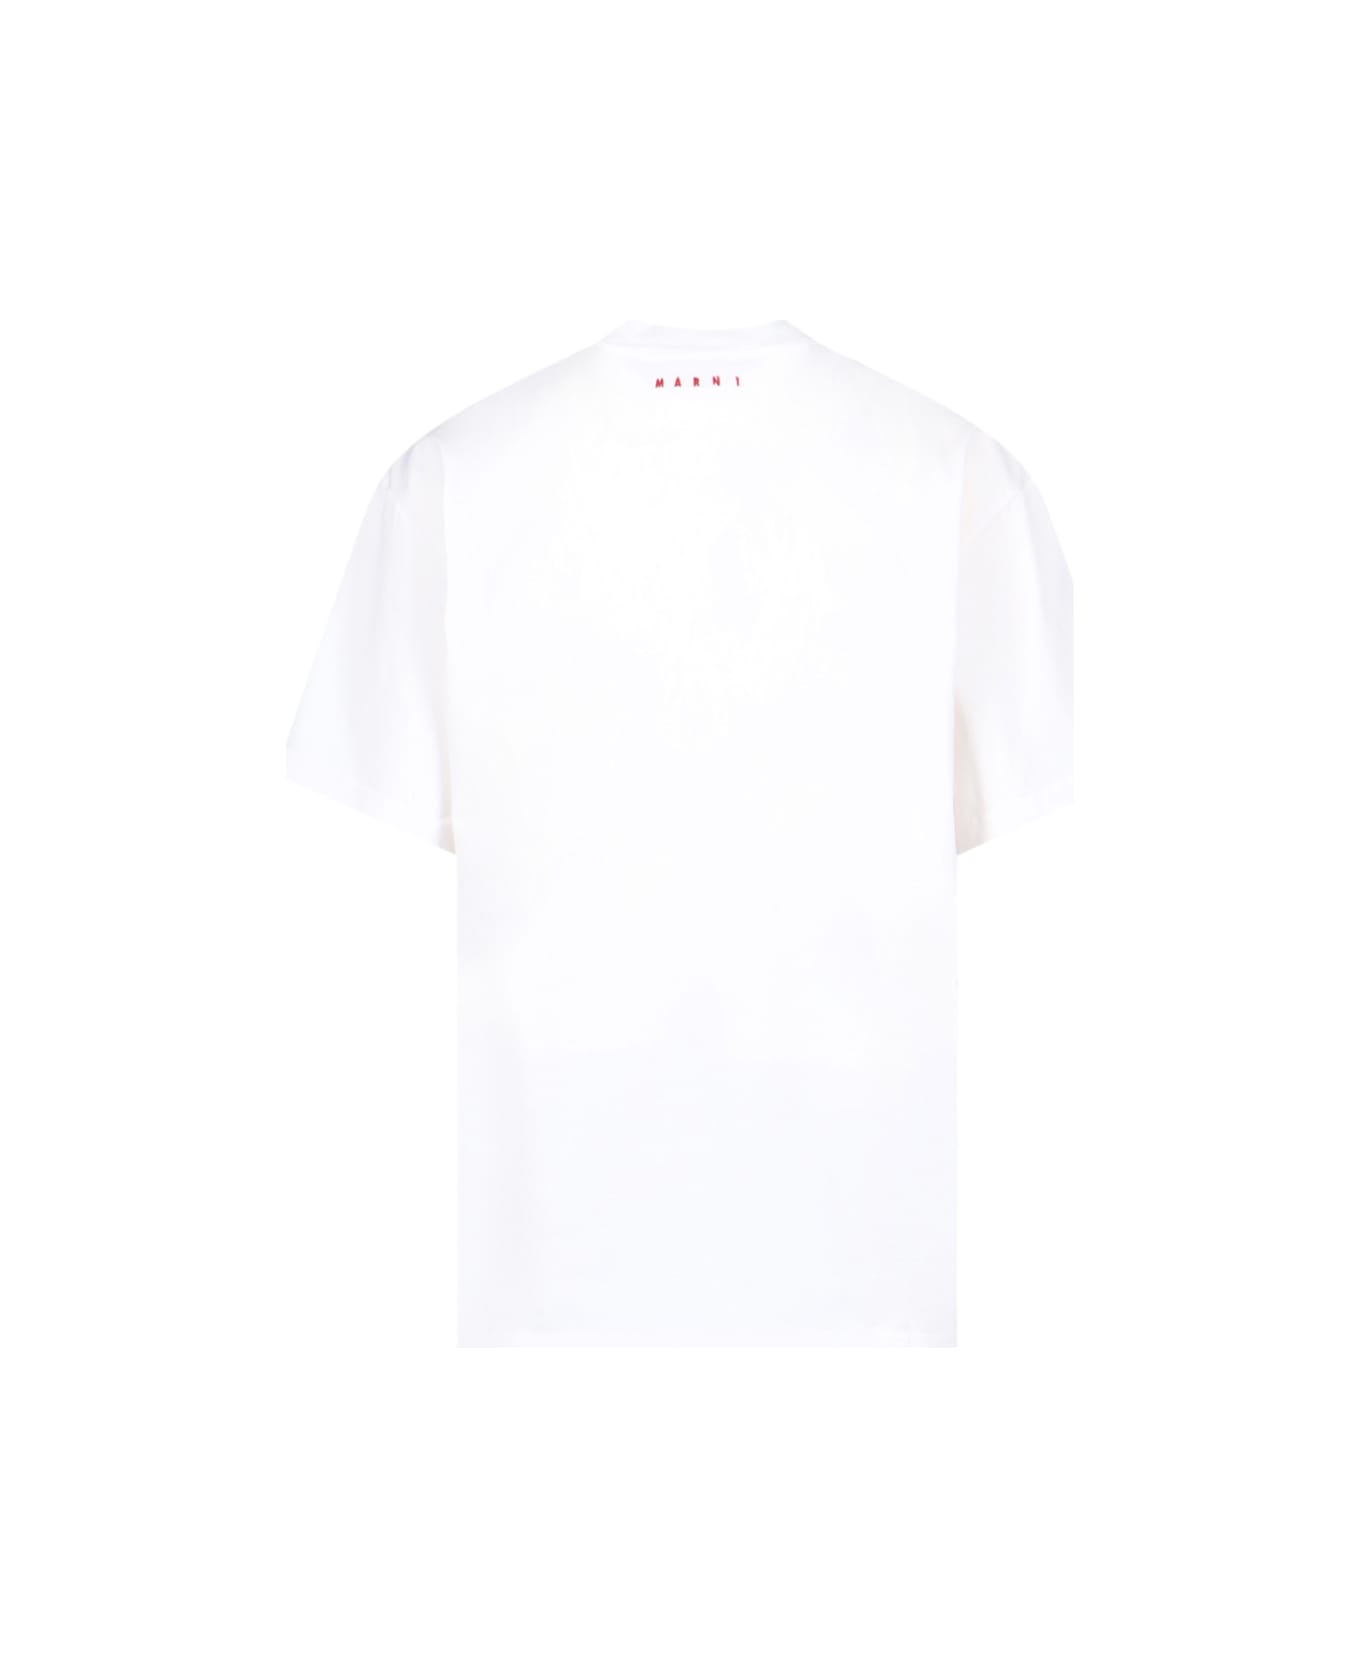 Marni Printed T-shirt - White シャツ